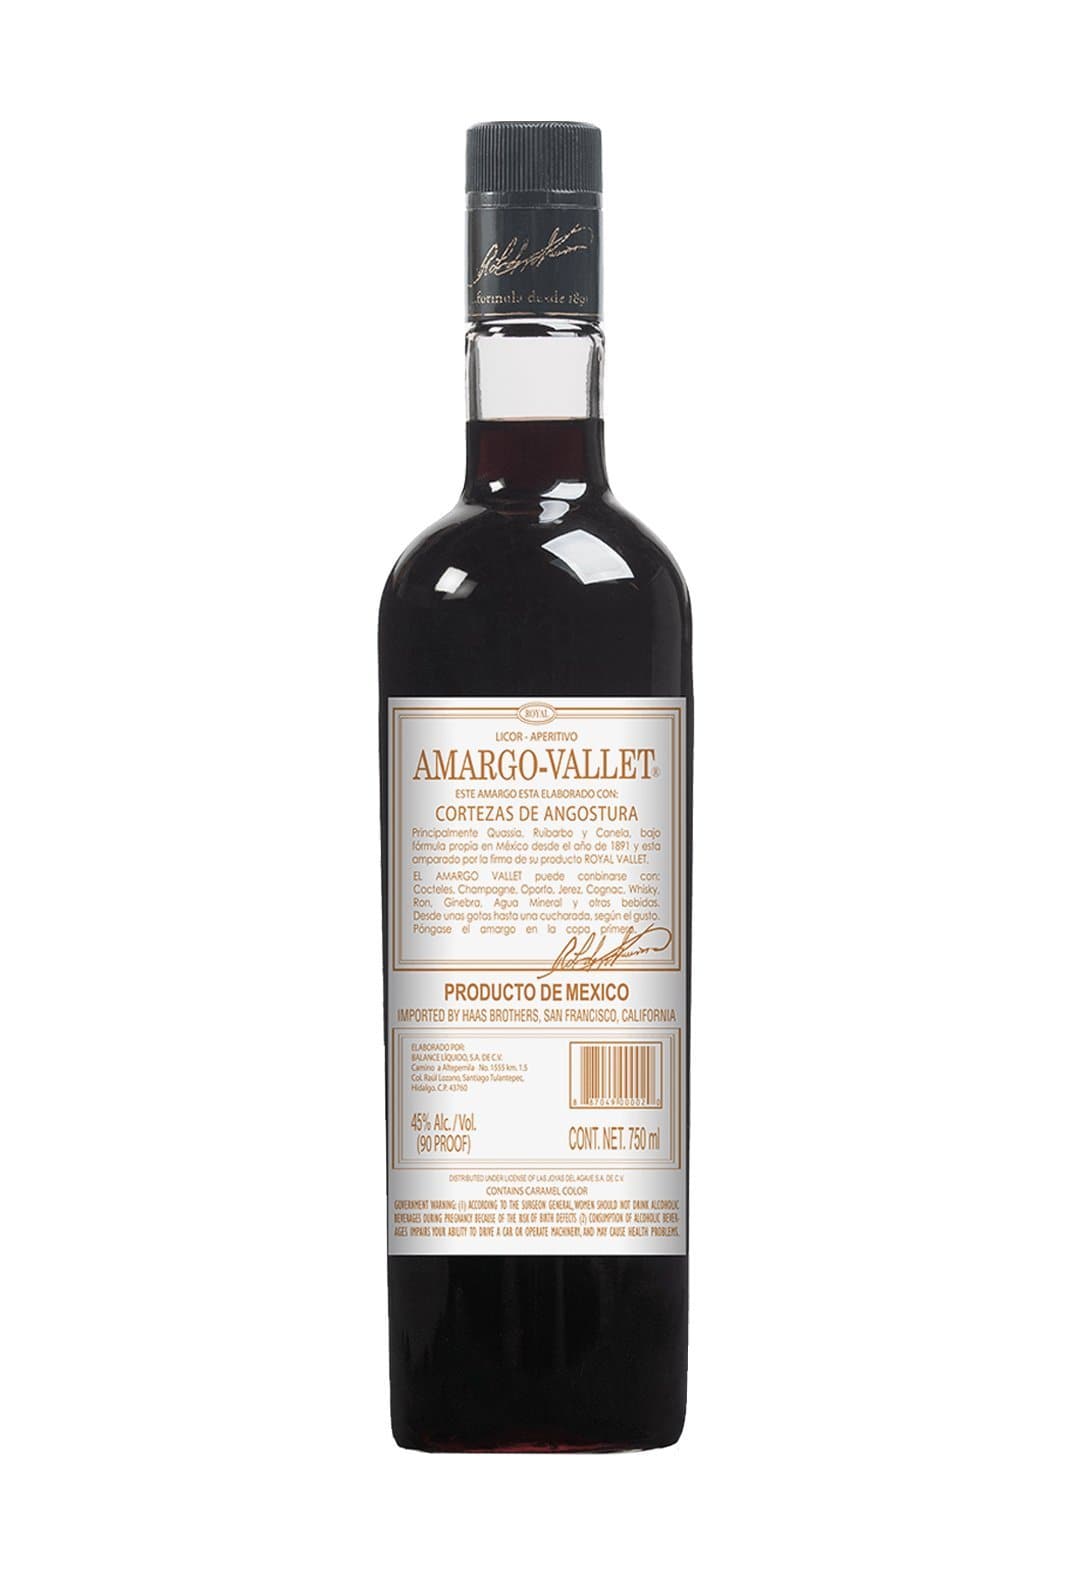 Amargo-Vallet Bitter liqueur Angostura 45% 750ml | Liqueurs | Shop online at Spirits of France